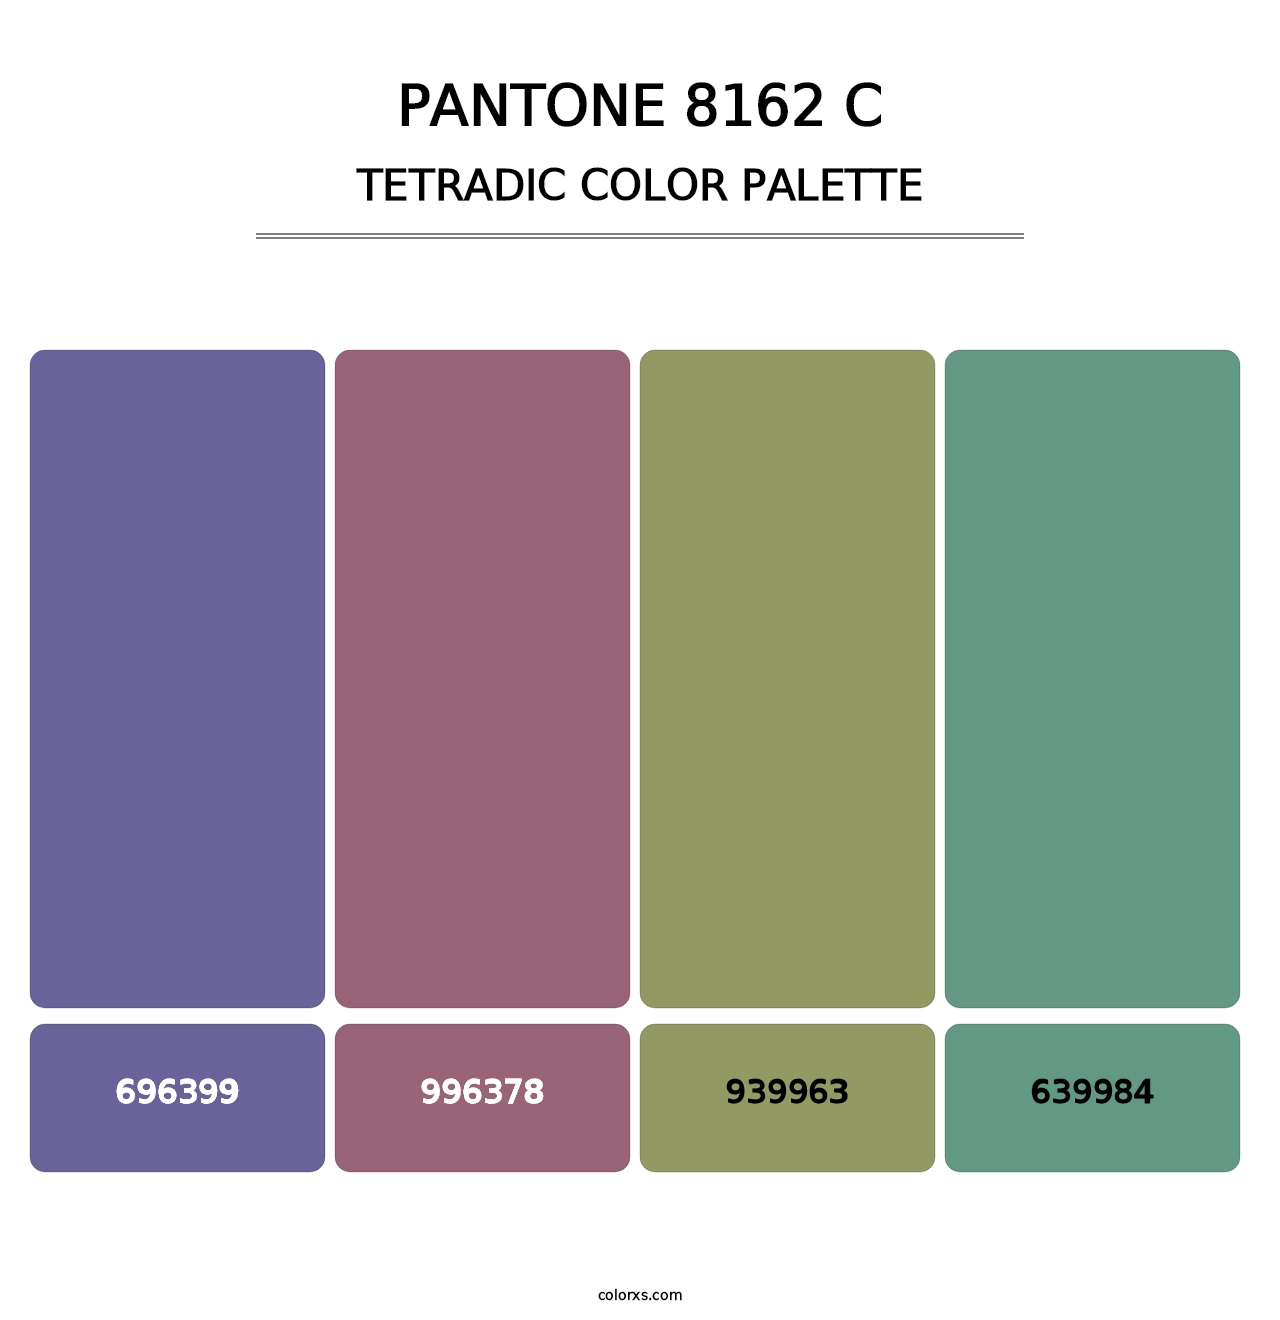 PANTONE 8162 C - Tetradic Color Palette